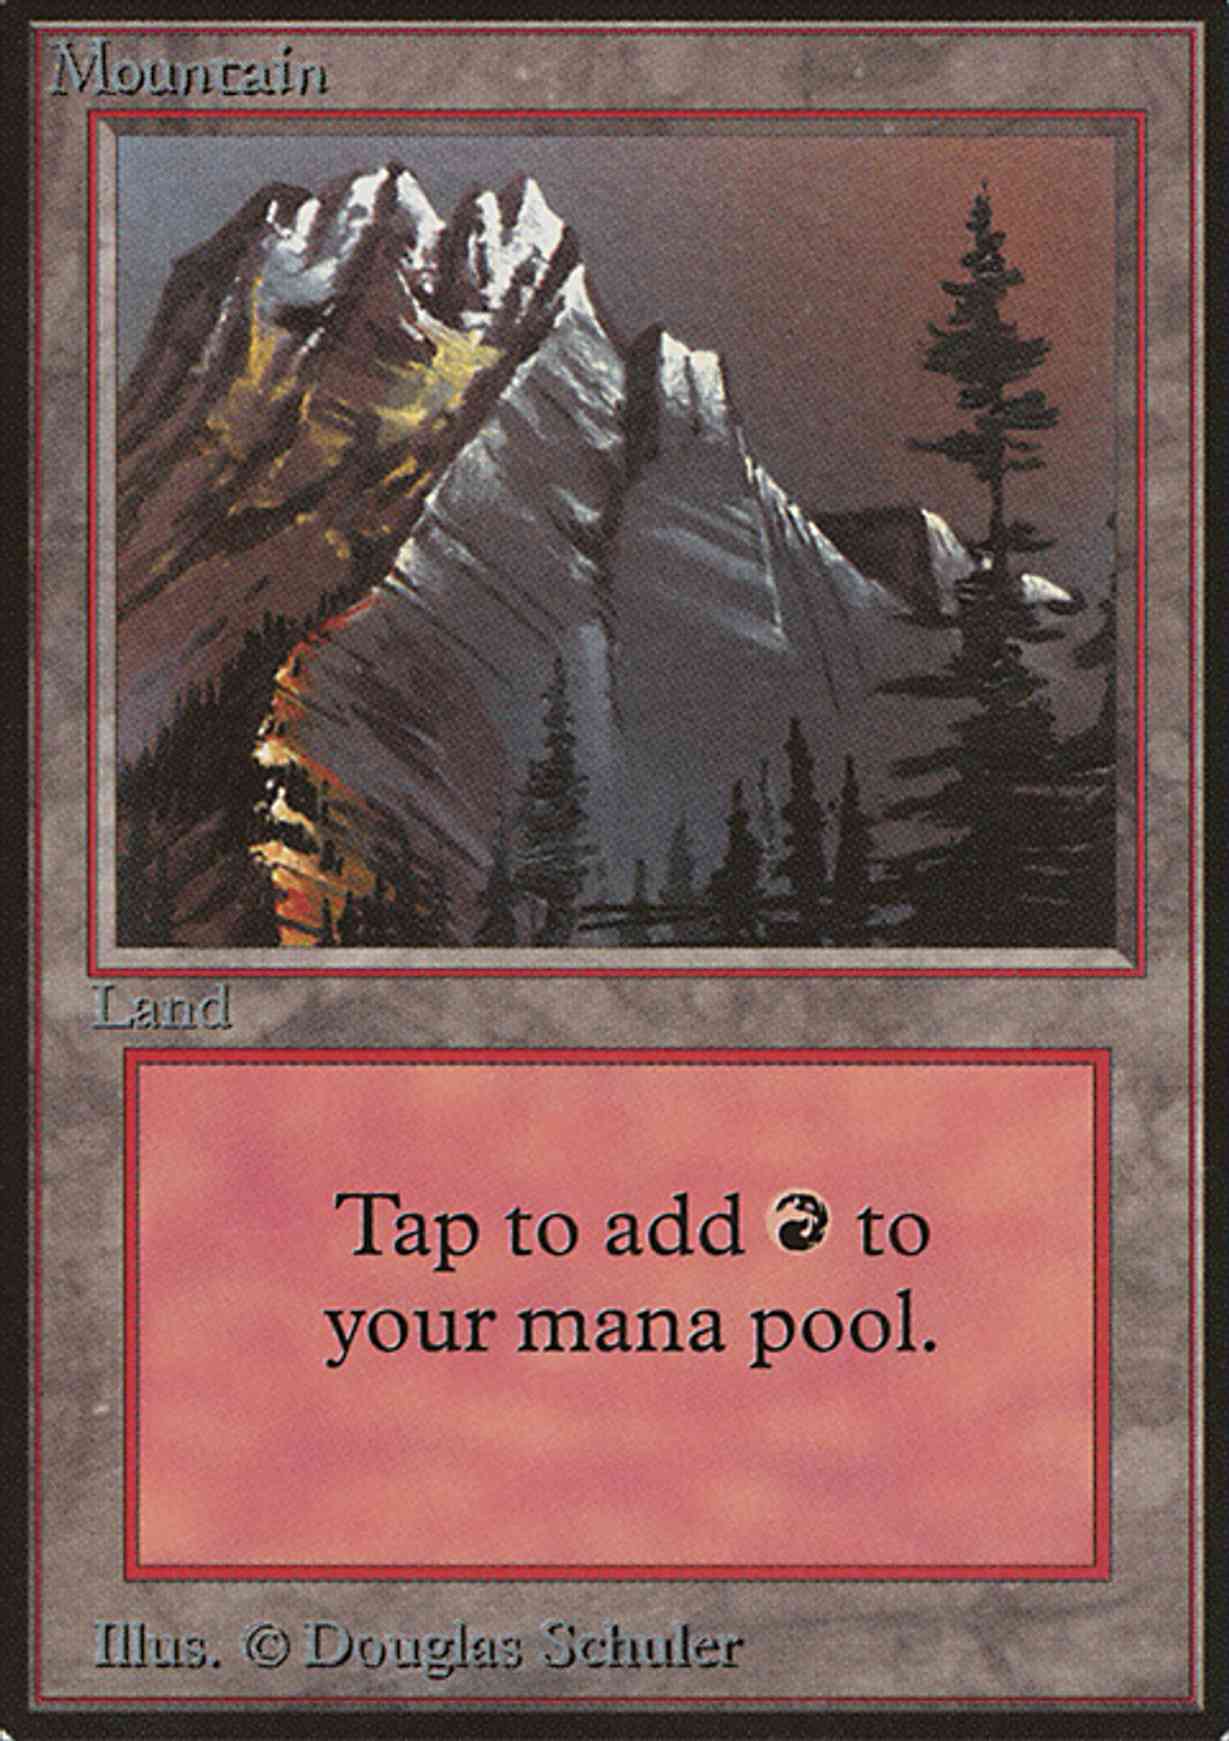 Mountain (A) magic card front